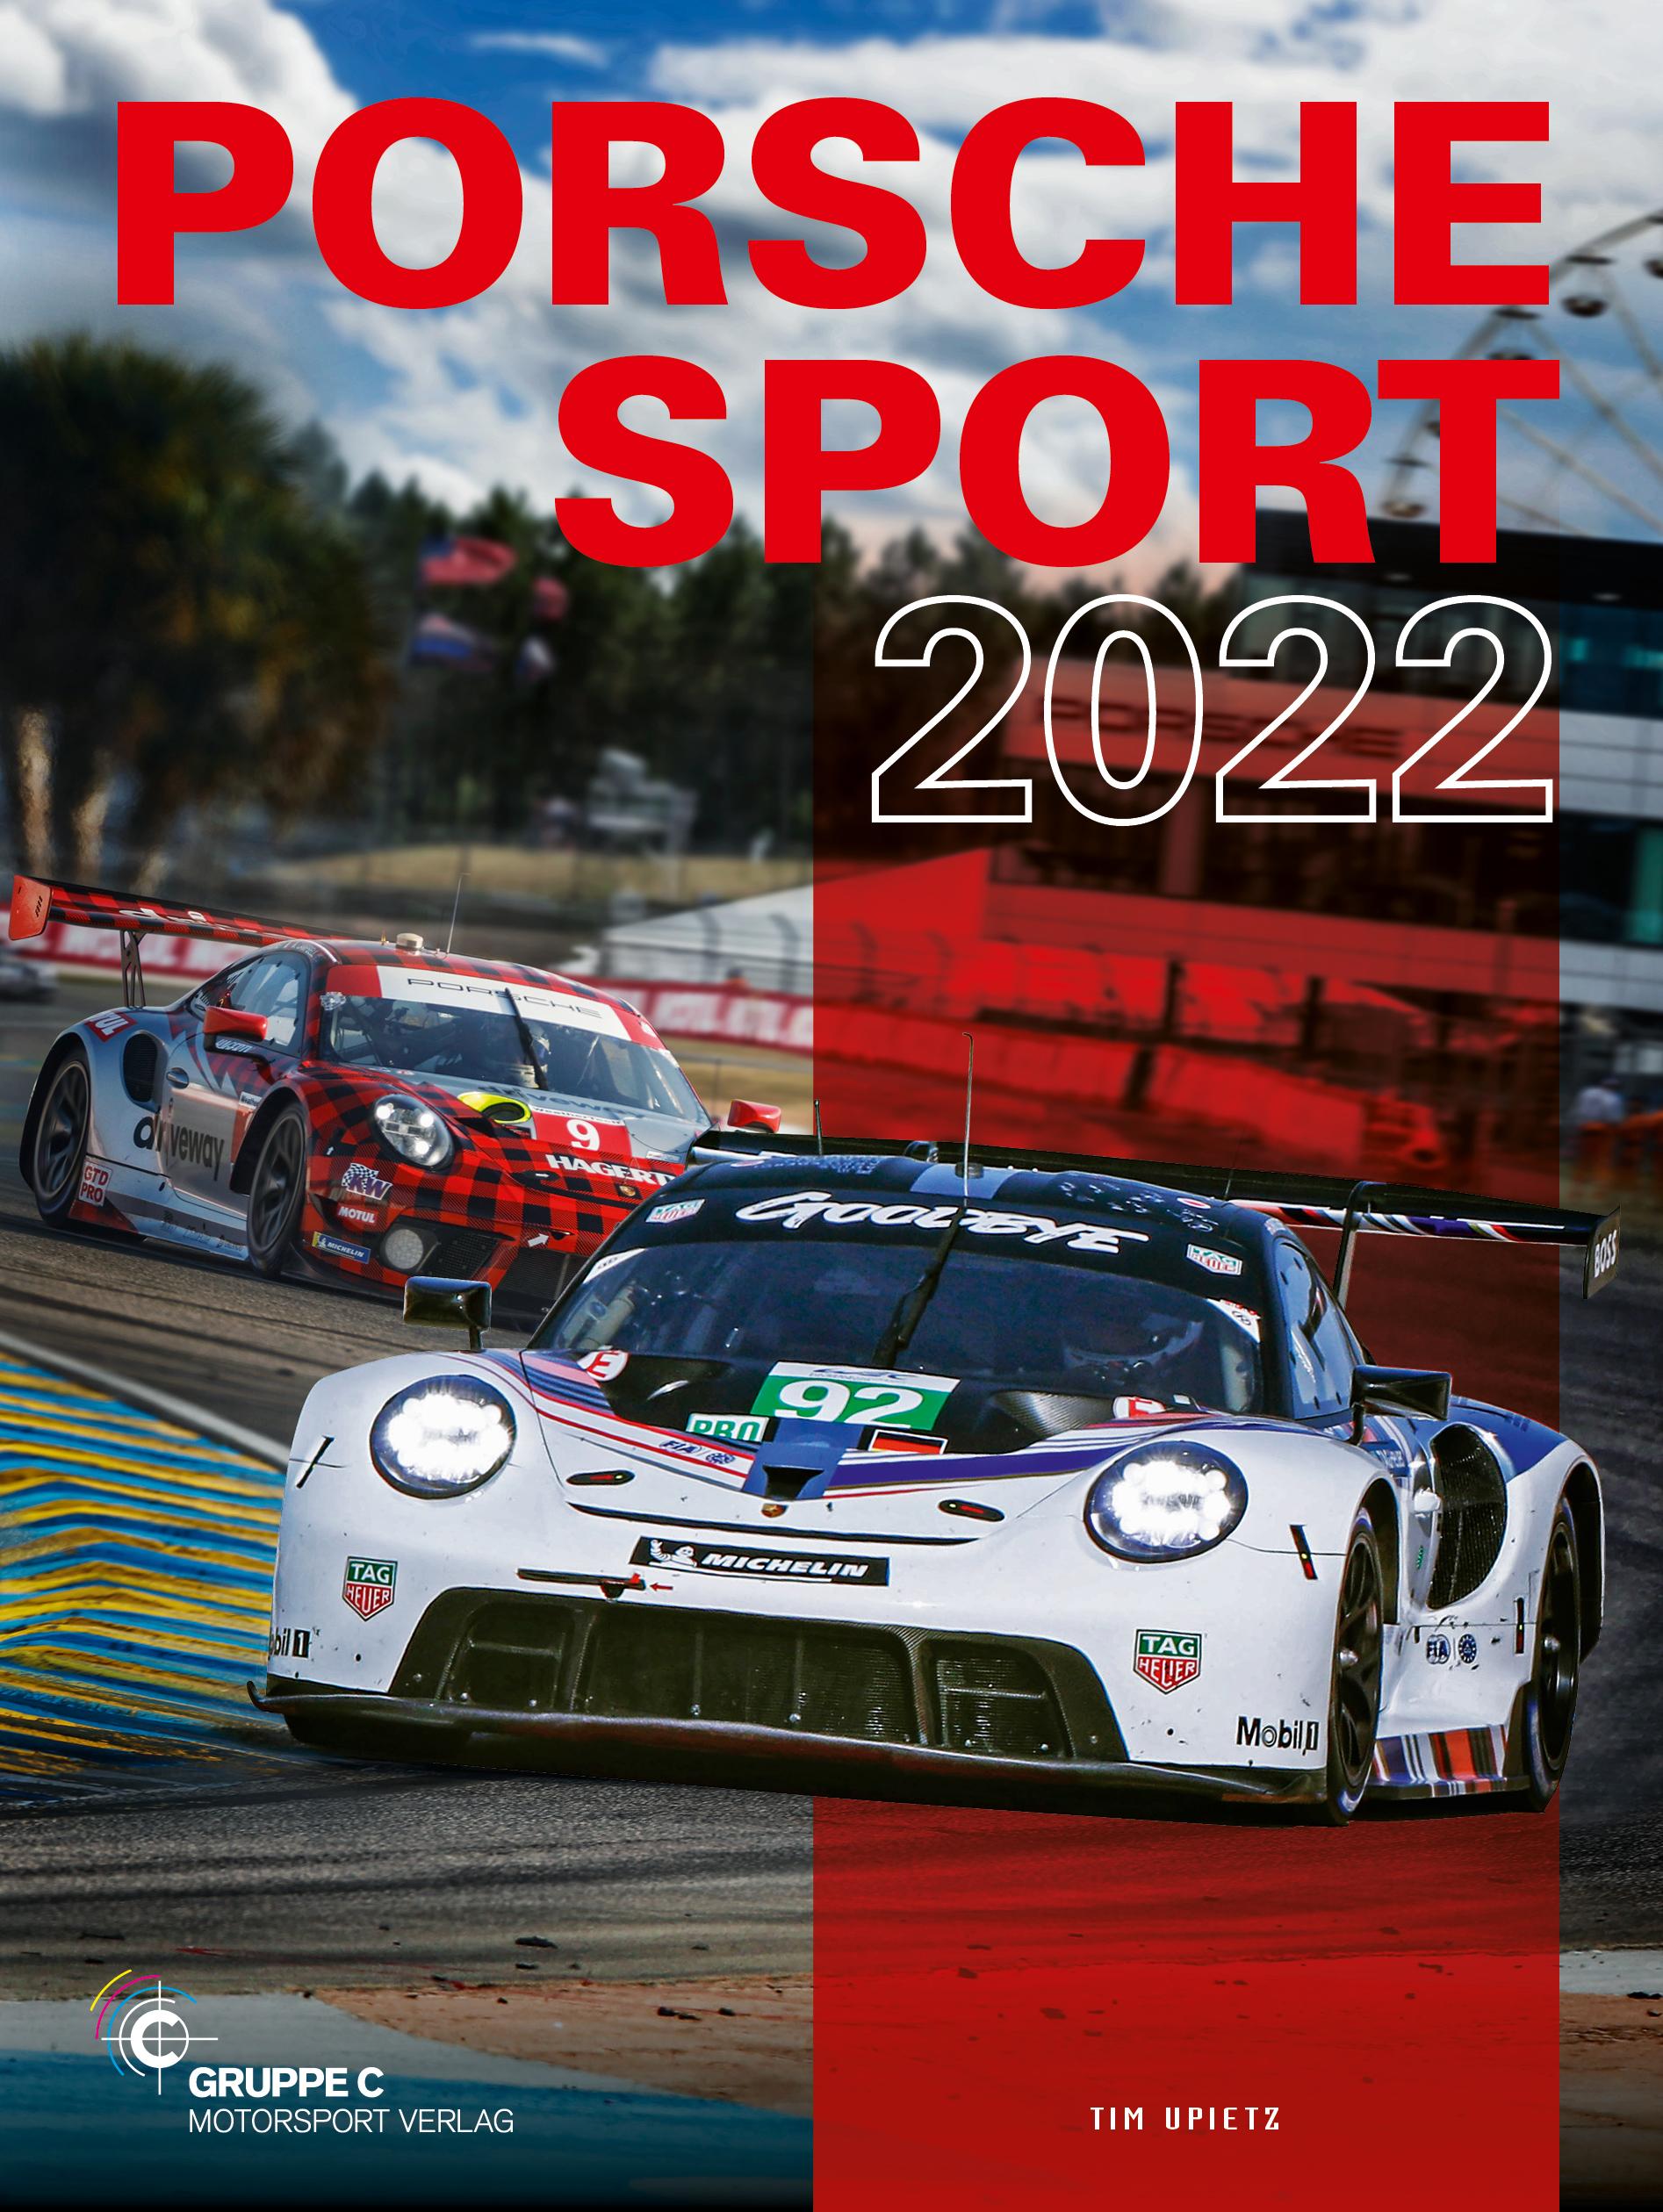 Porsche Motorsport / Porsche Sport 2022 Dt/engl, Porsche Motorsport 30